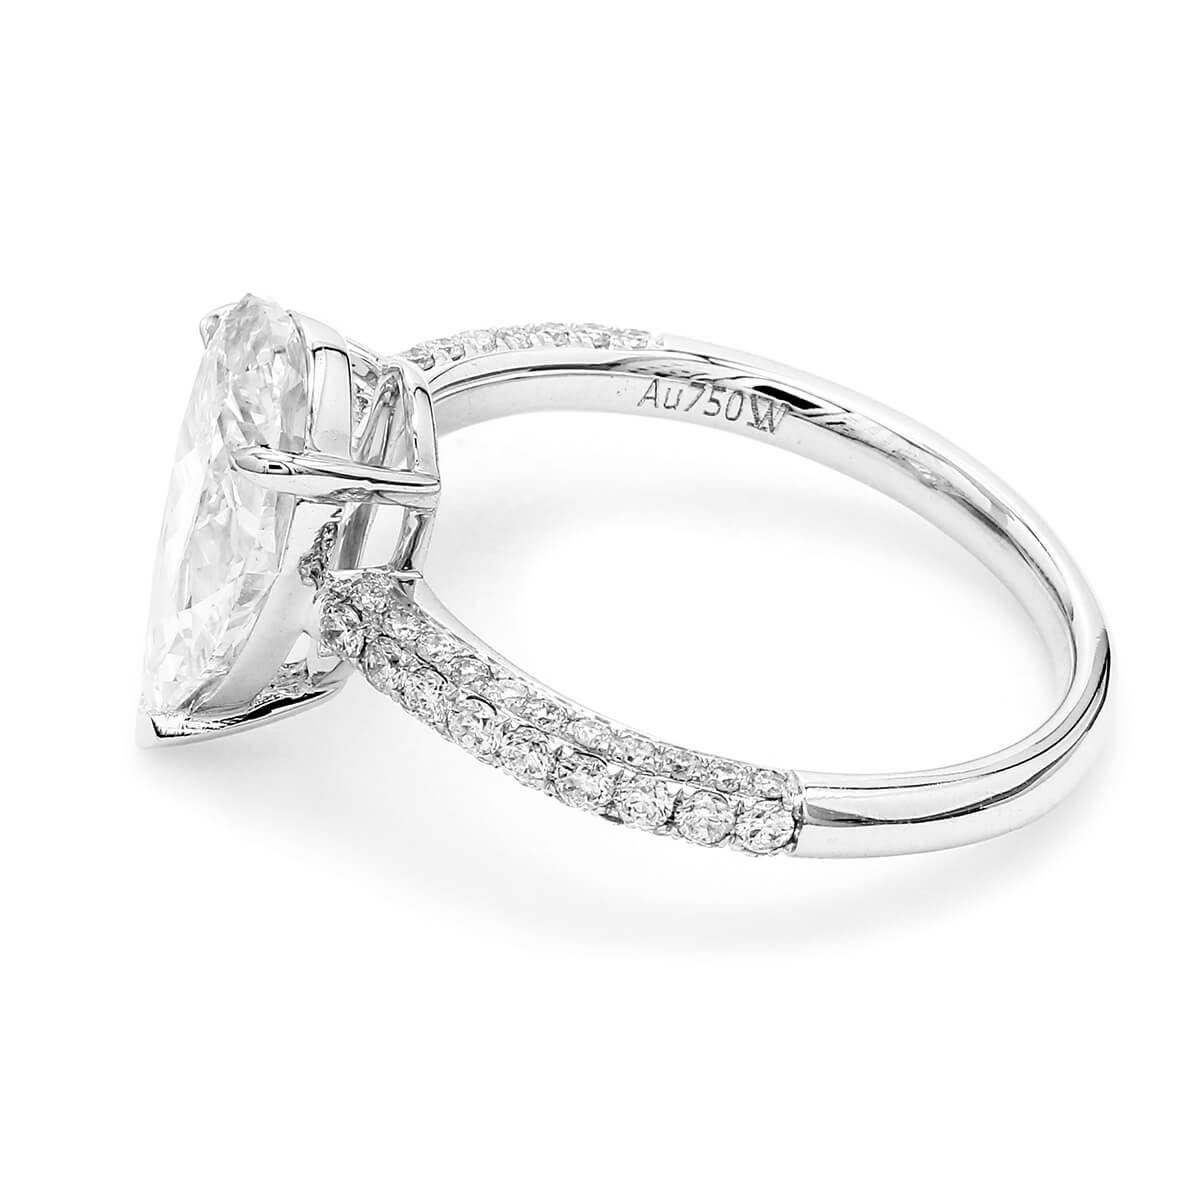  White Diamond Ring, 2.01 Ct. (2.45 Ct. TW), Pear shape, GIA Certified, 7308337801